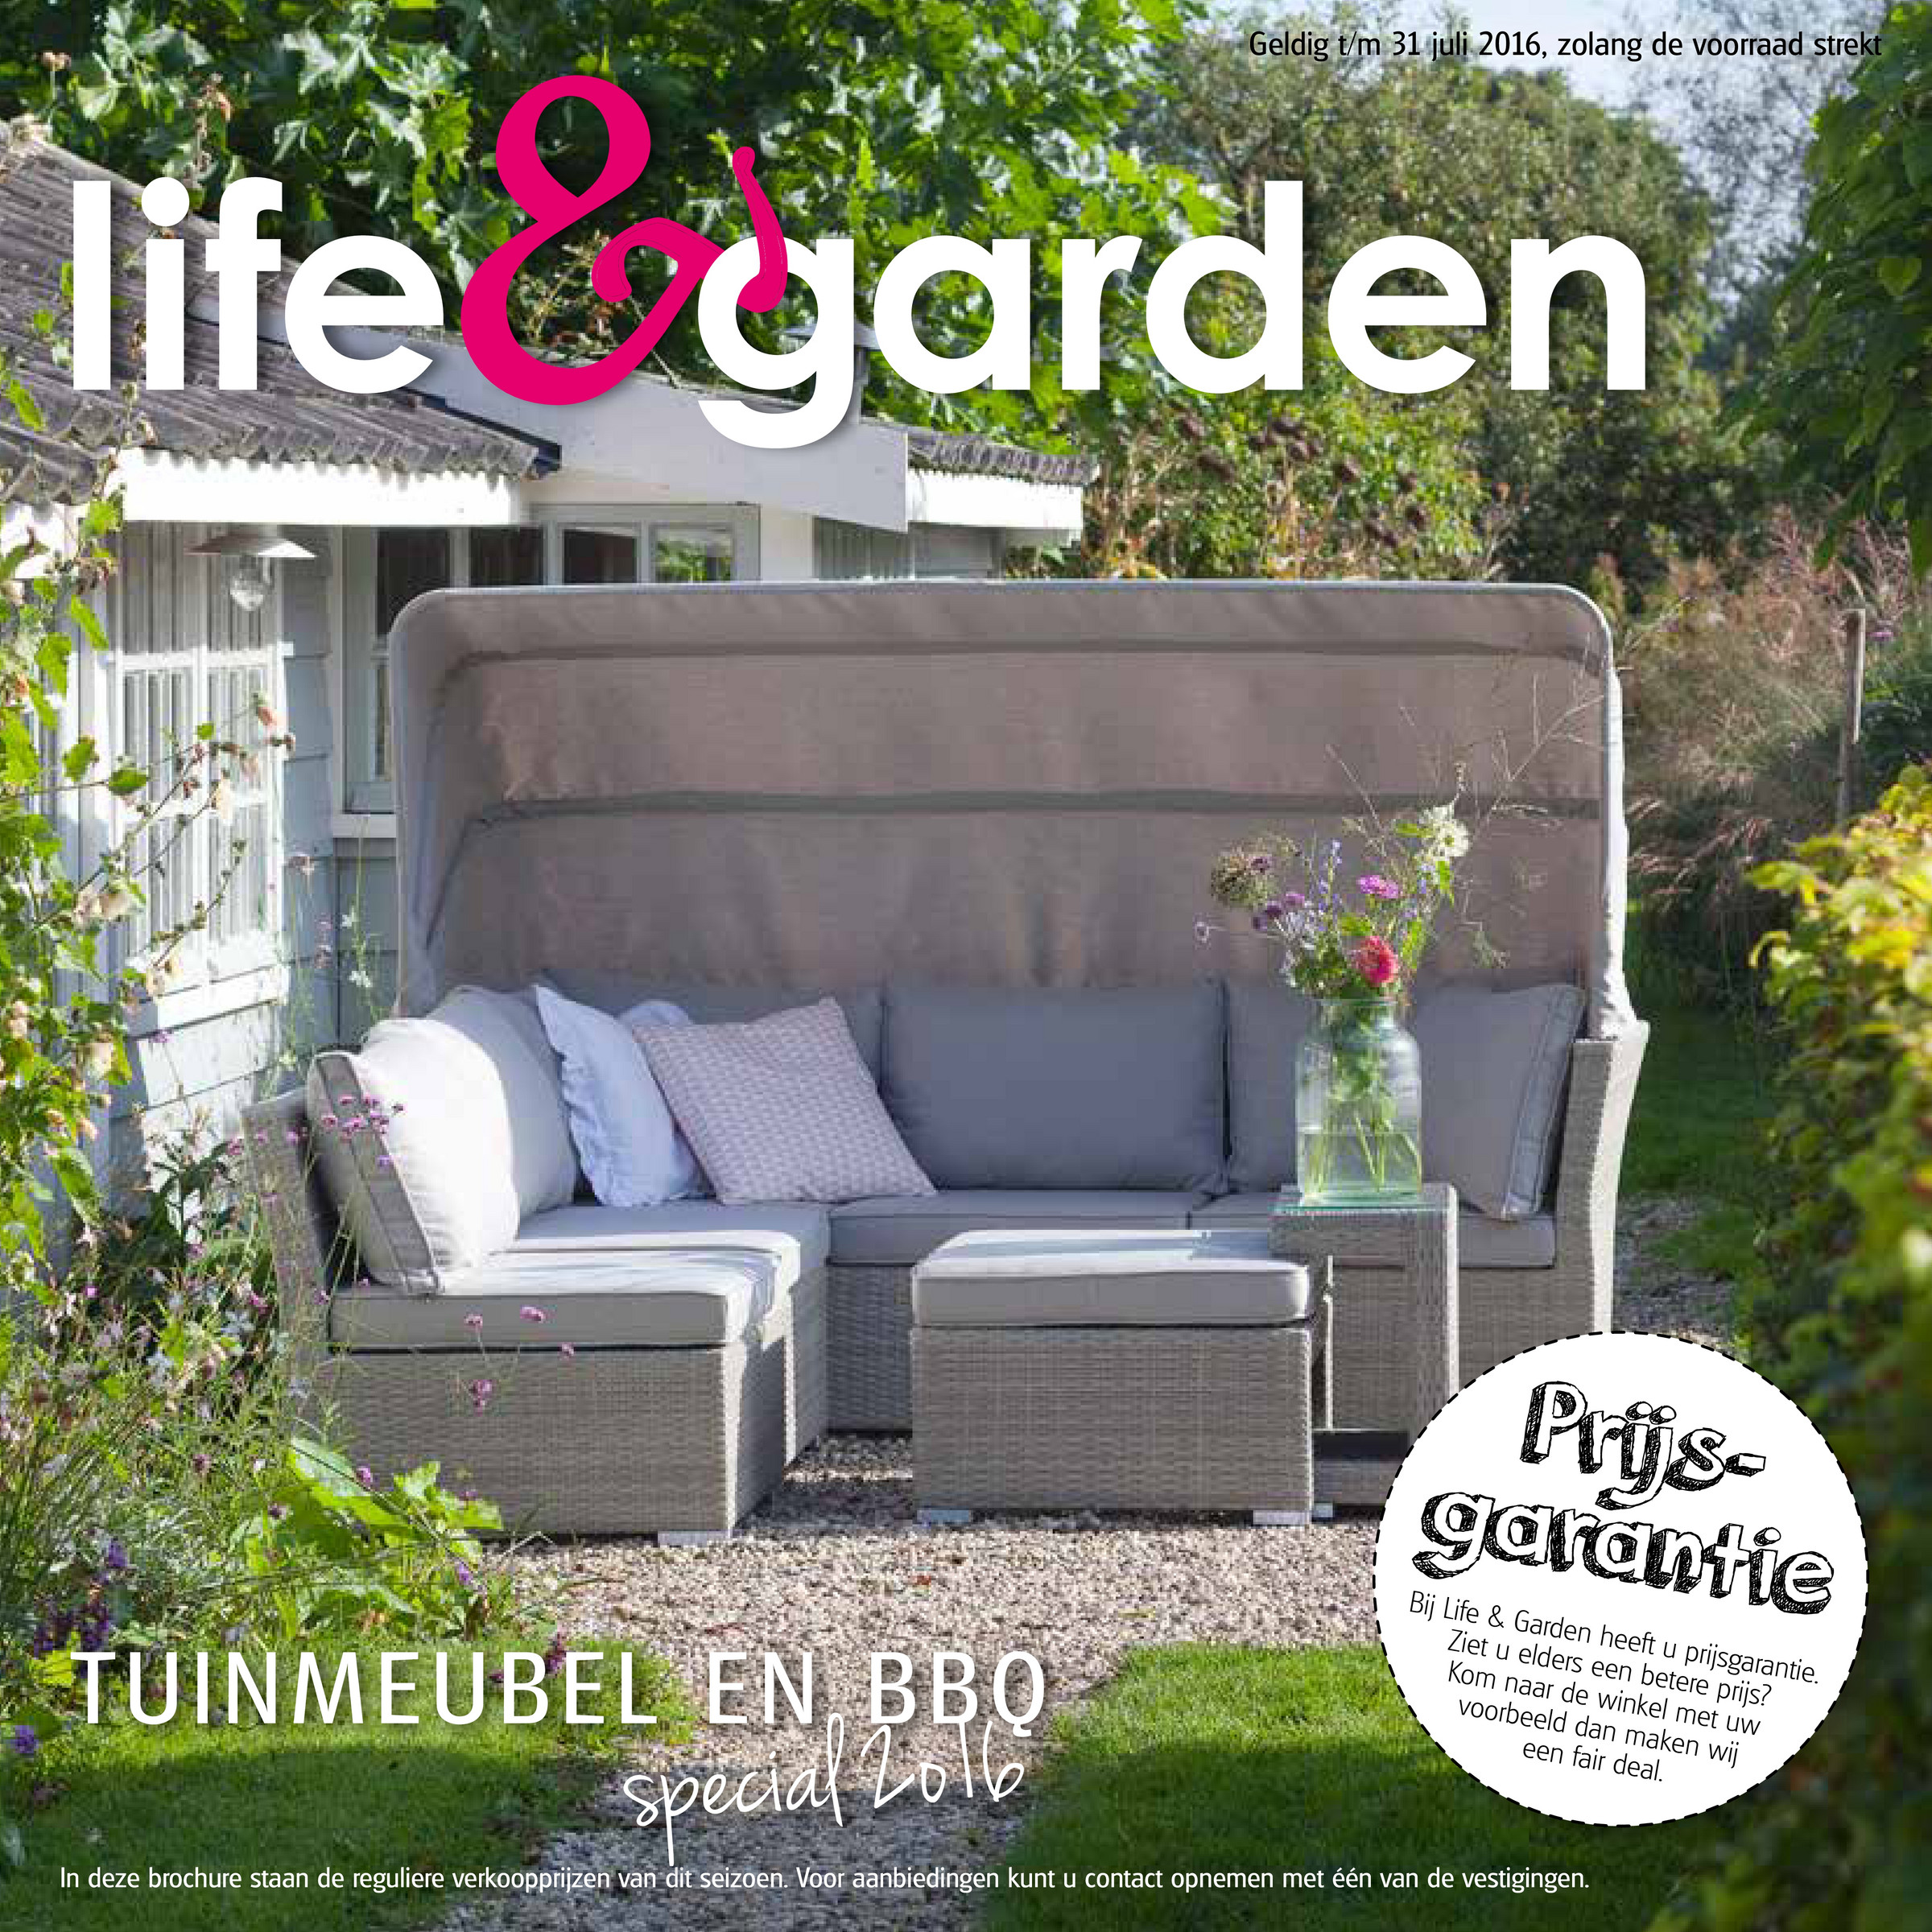 Folderaanbiedingen - Life Garden tuinmeubel en bbq folder 2016 - Pagina 20-21